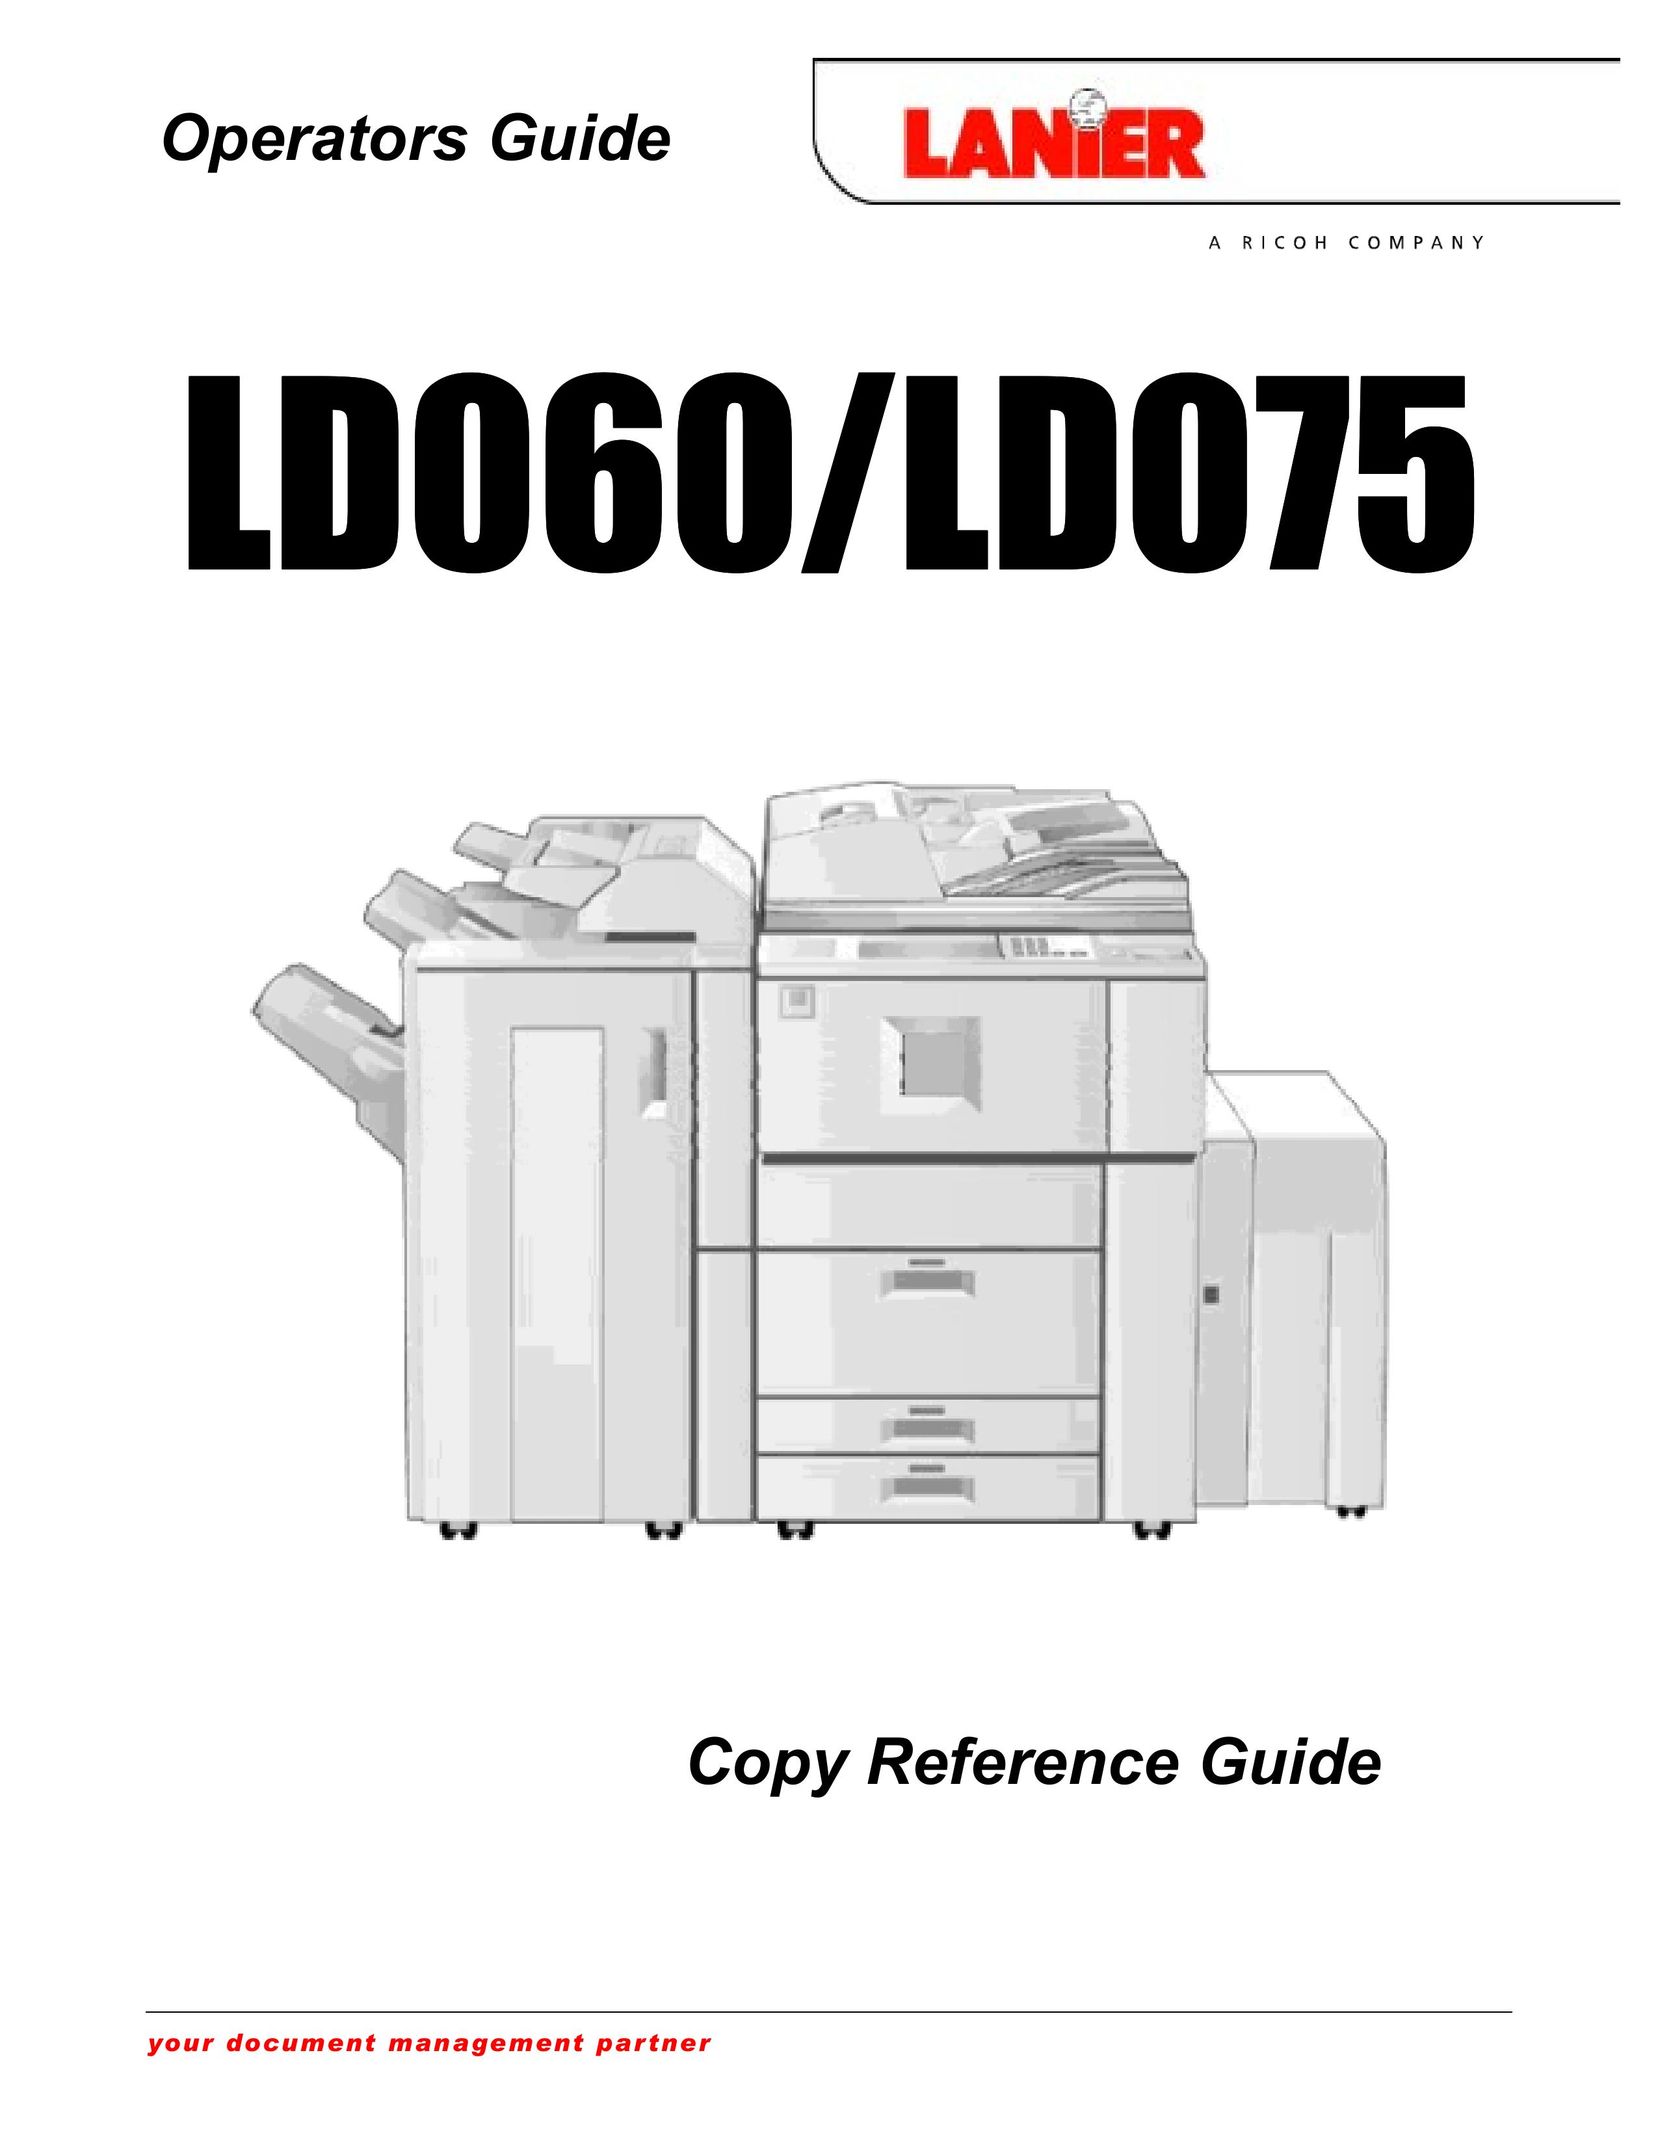 Lanier LD075 Copier User Manual